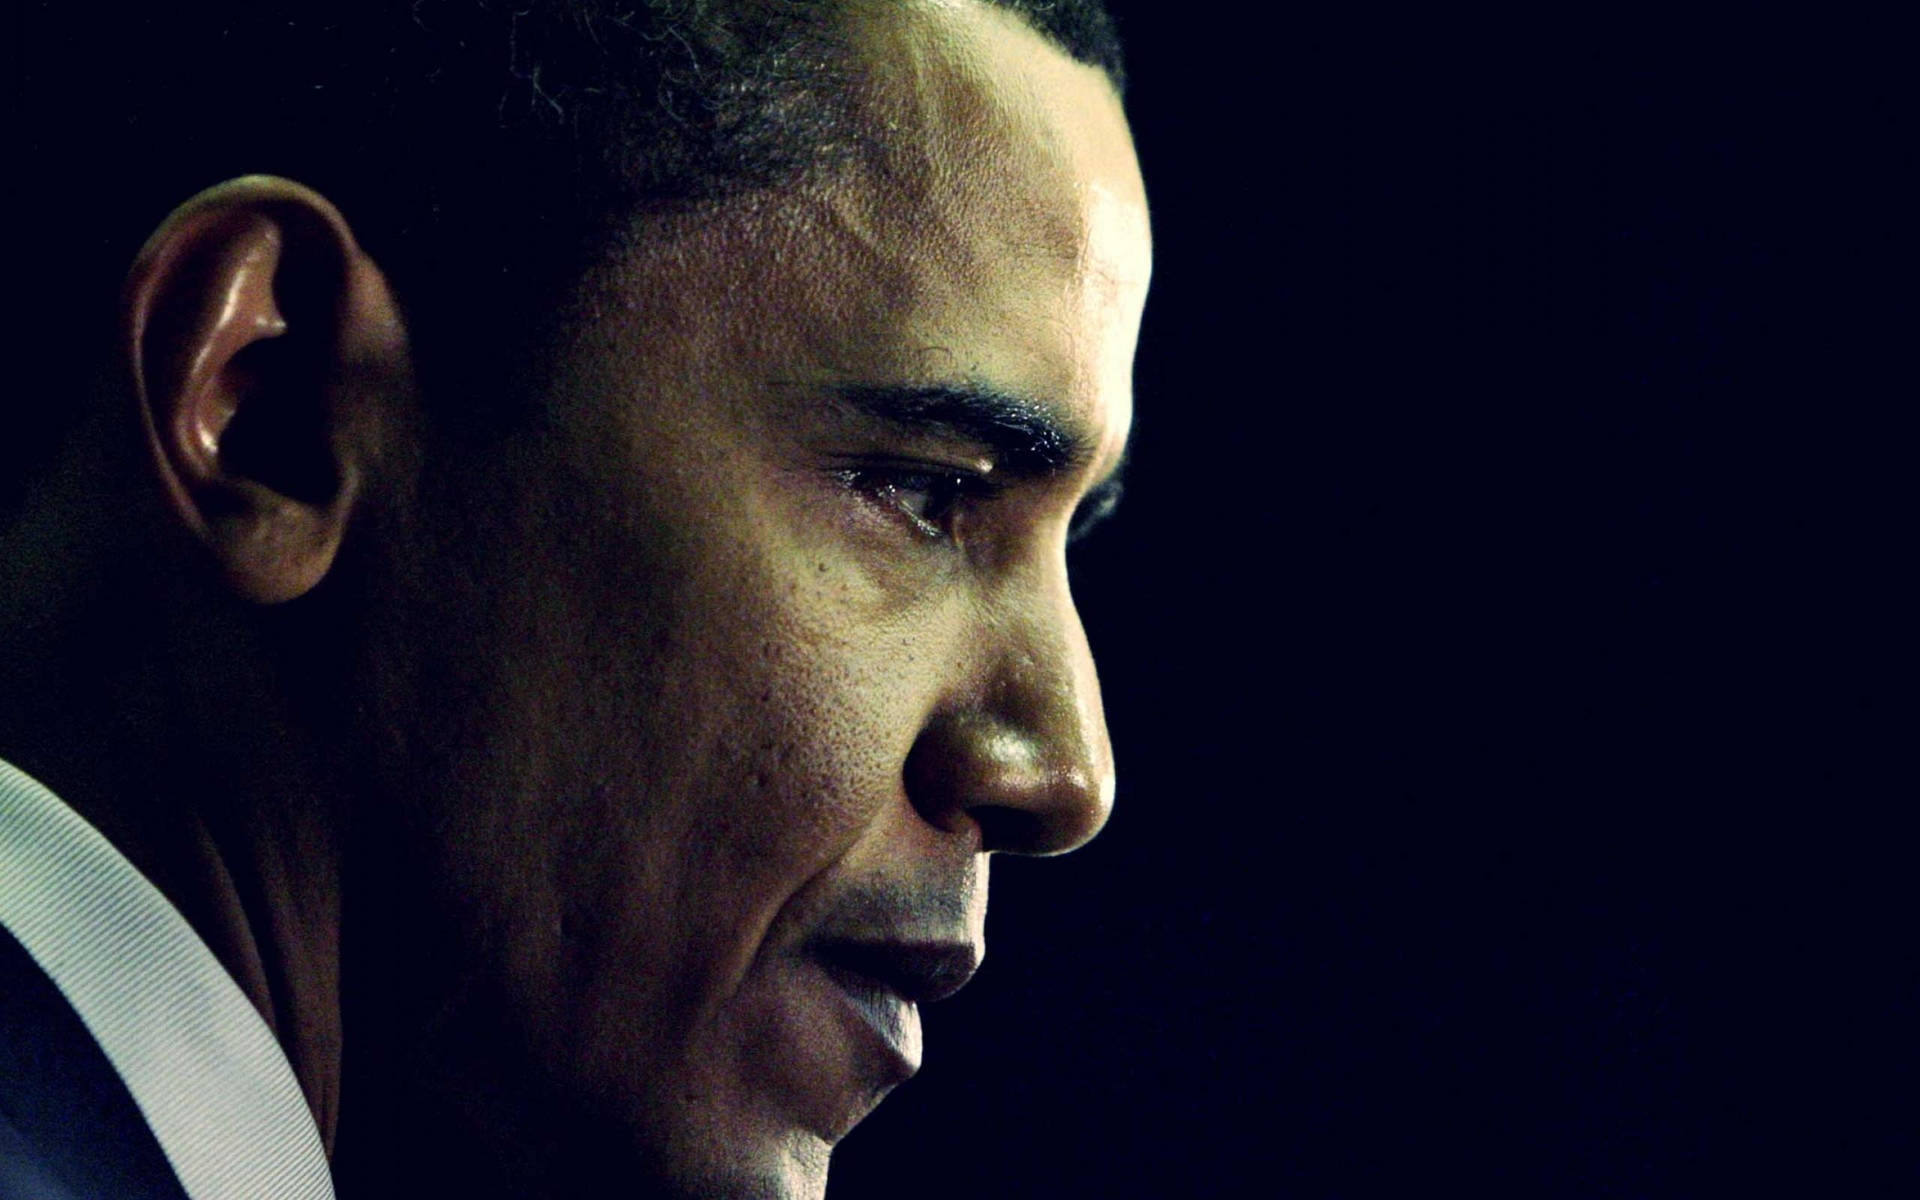 Barack Obama Side View Male Face Wallpaper